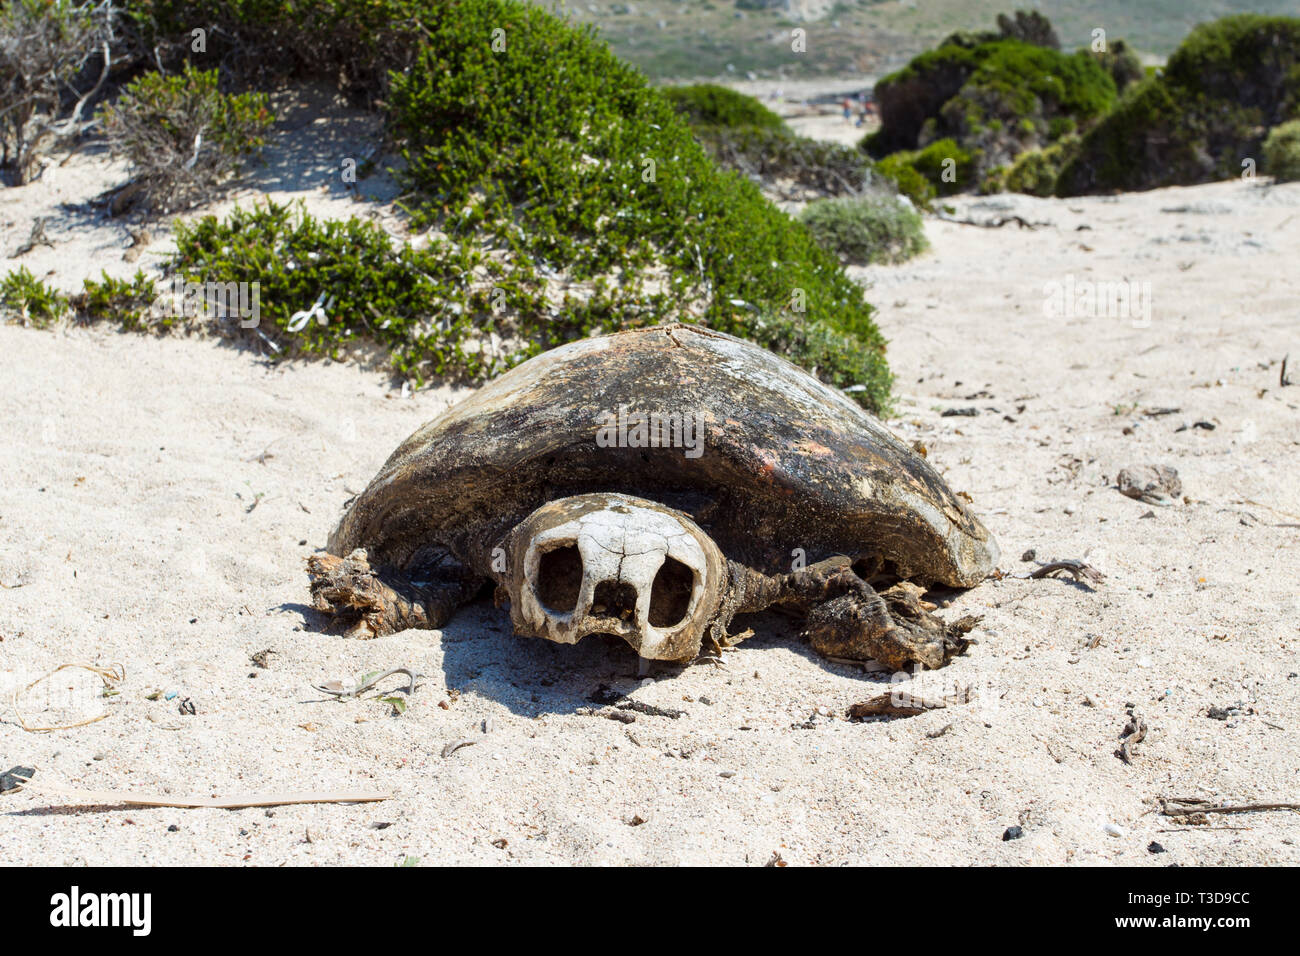 Tote Schildkroete, morte turtle Foto Stock